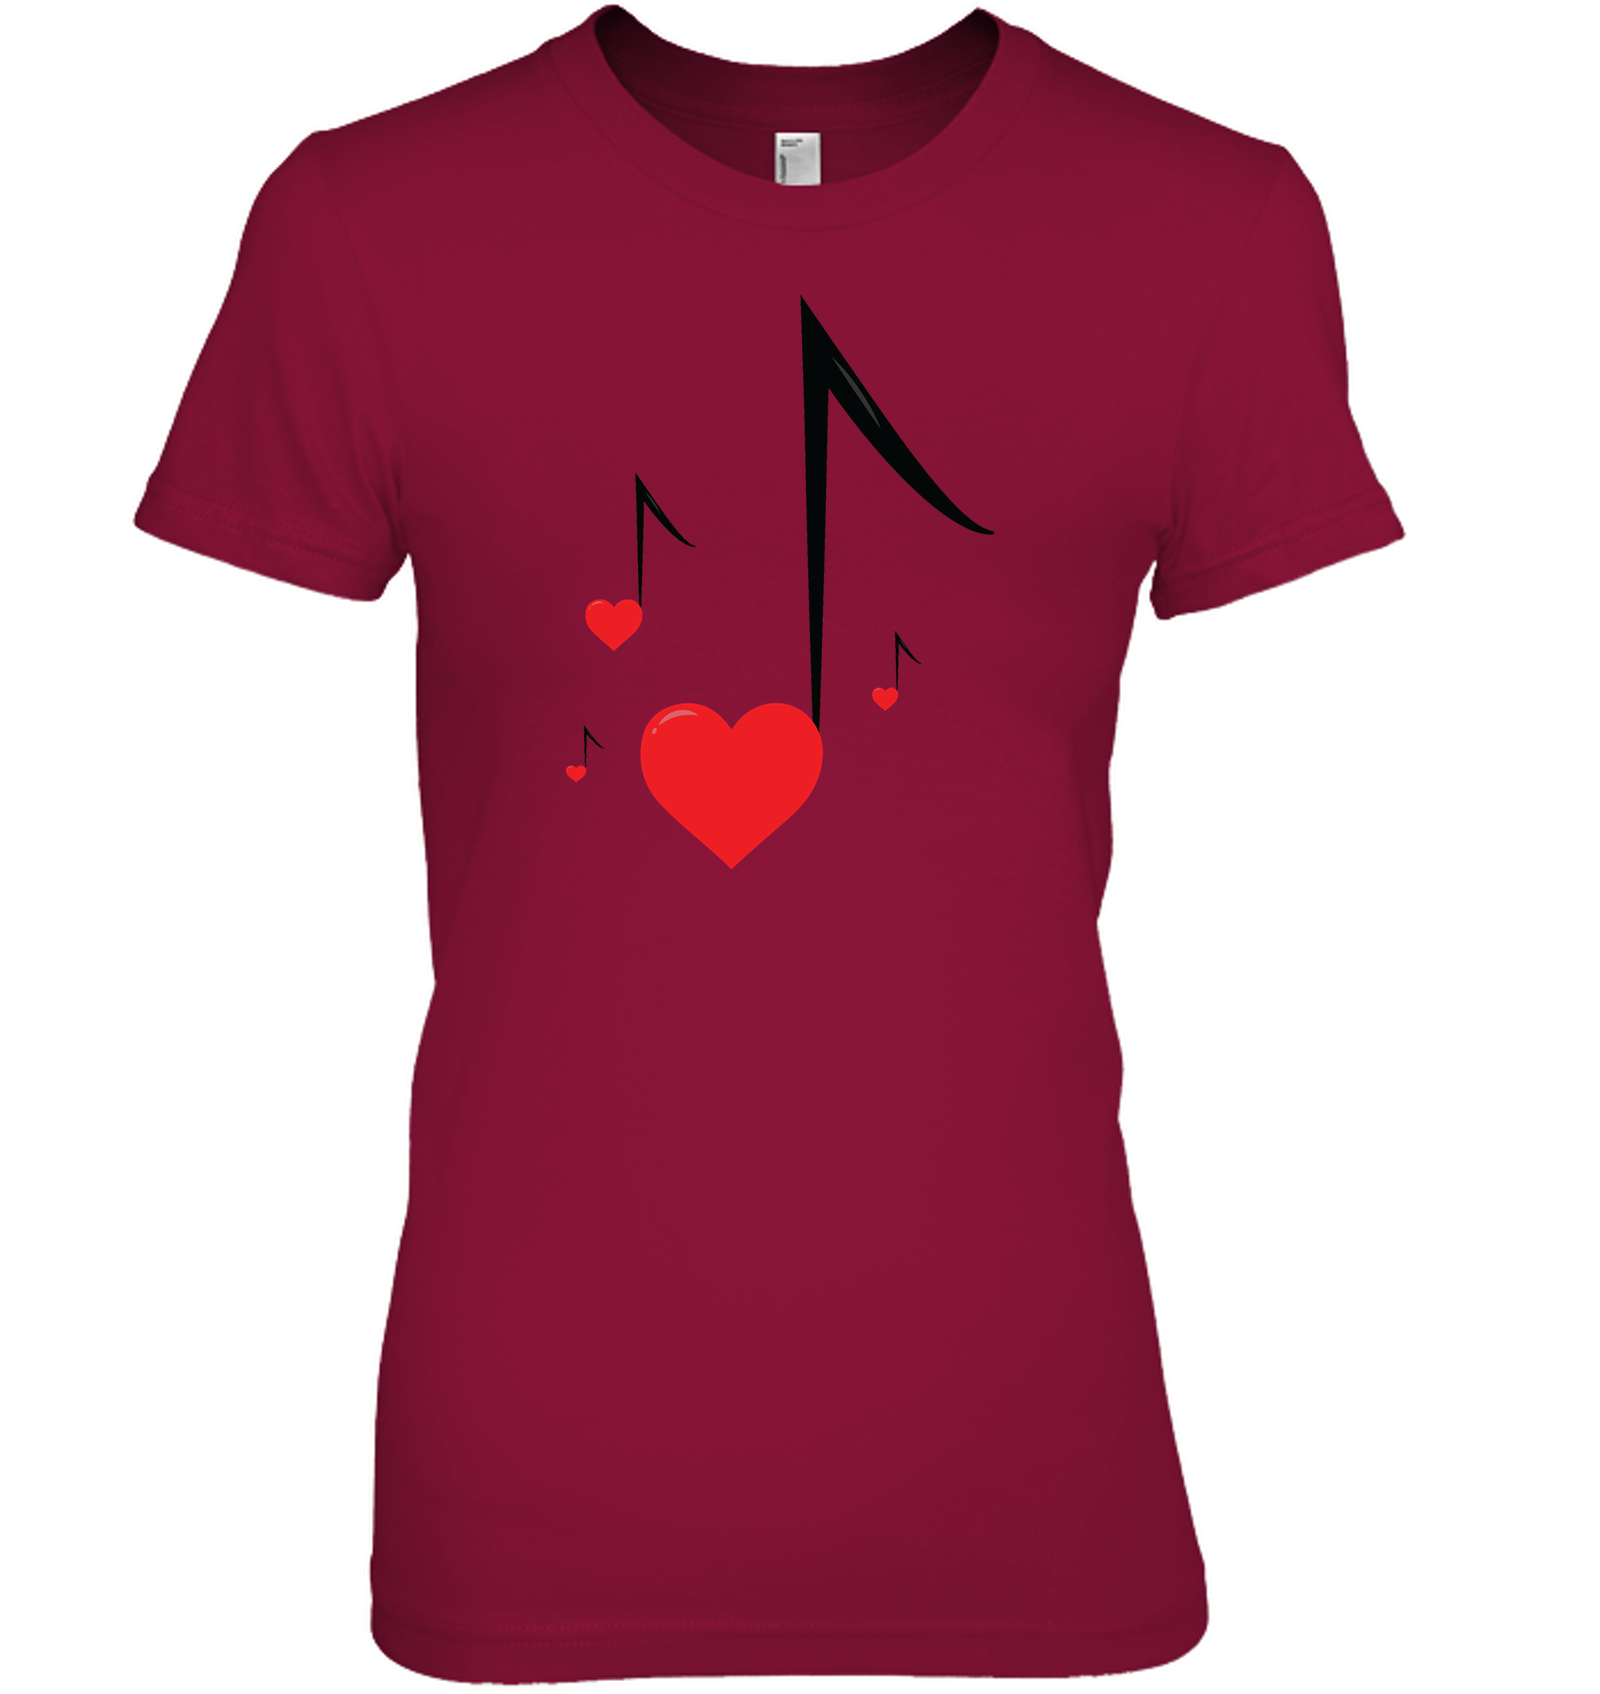 Four Floating Heart Notes  - Hanes Women's Nano-T® T-shirt